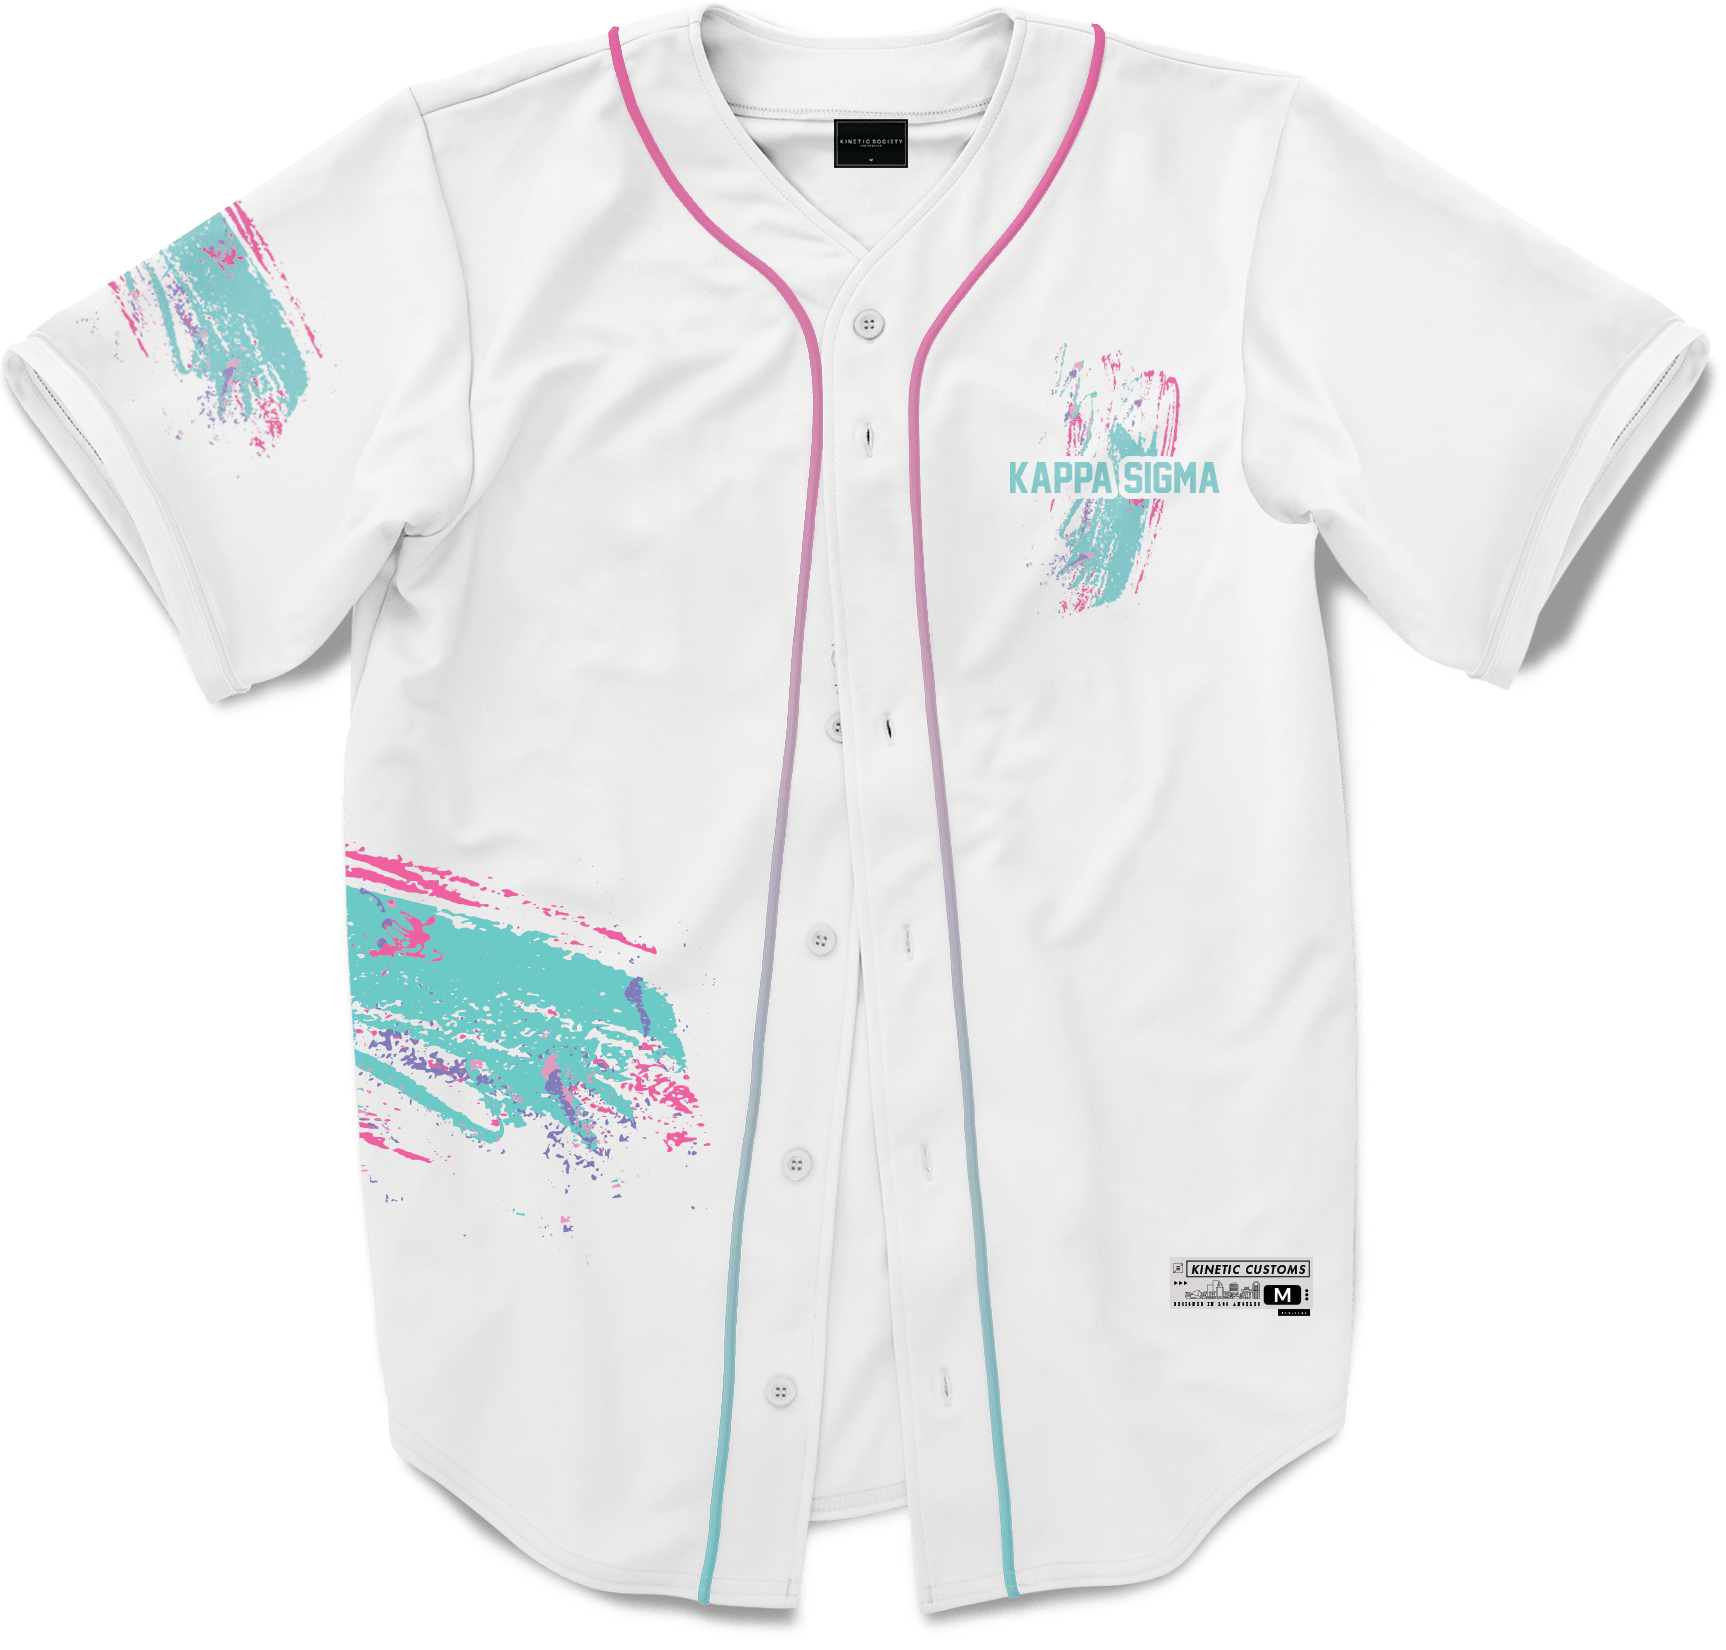 Kappa Sigma - White Miami Beach Splash Baseball Jersey - Kinetic Society